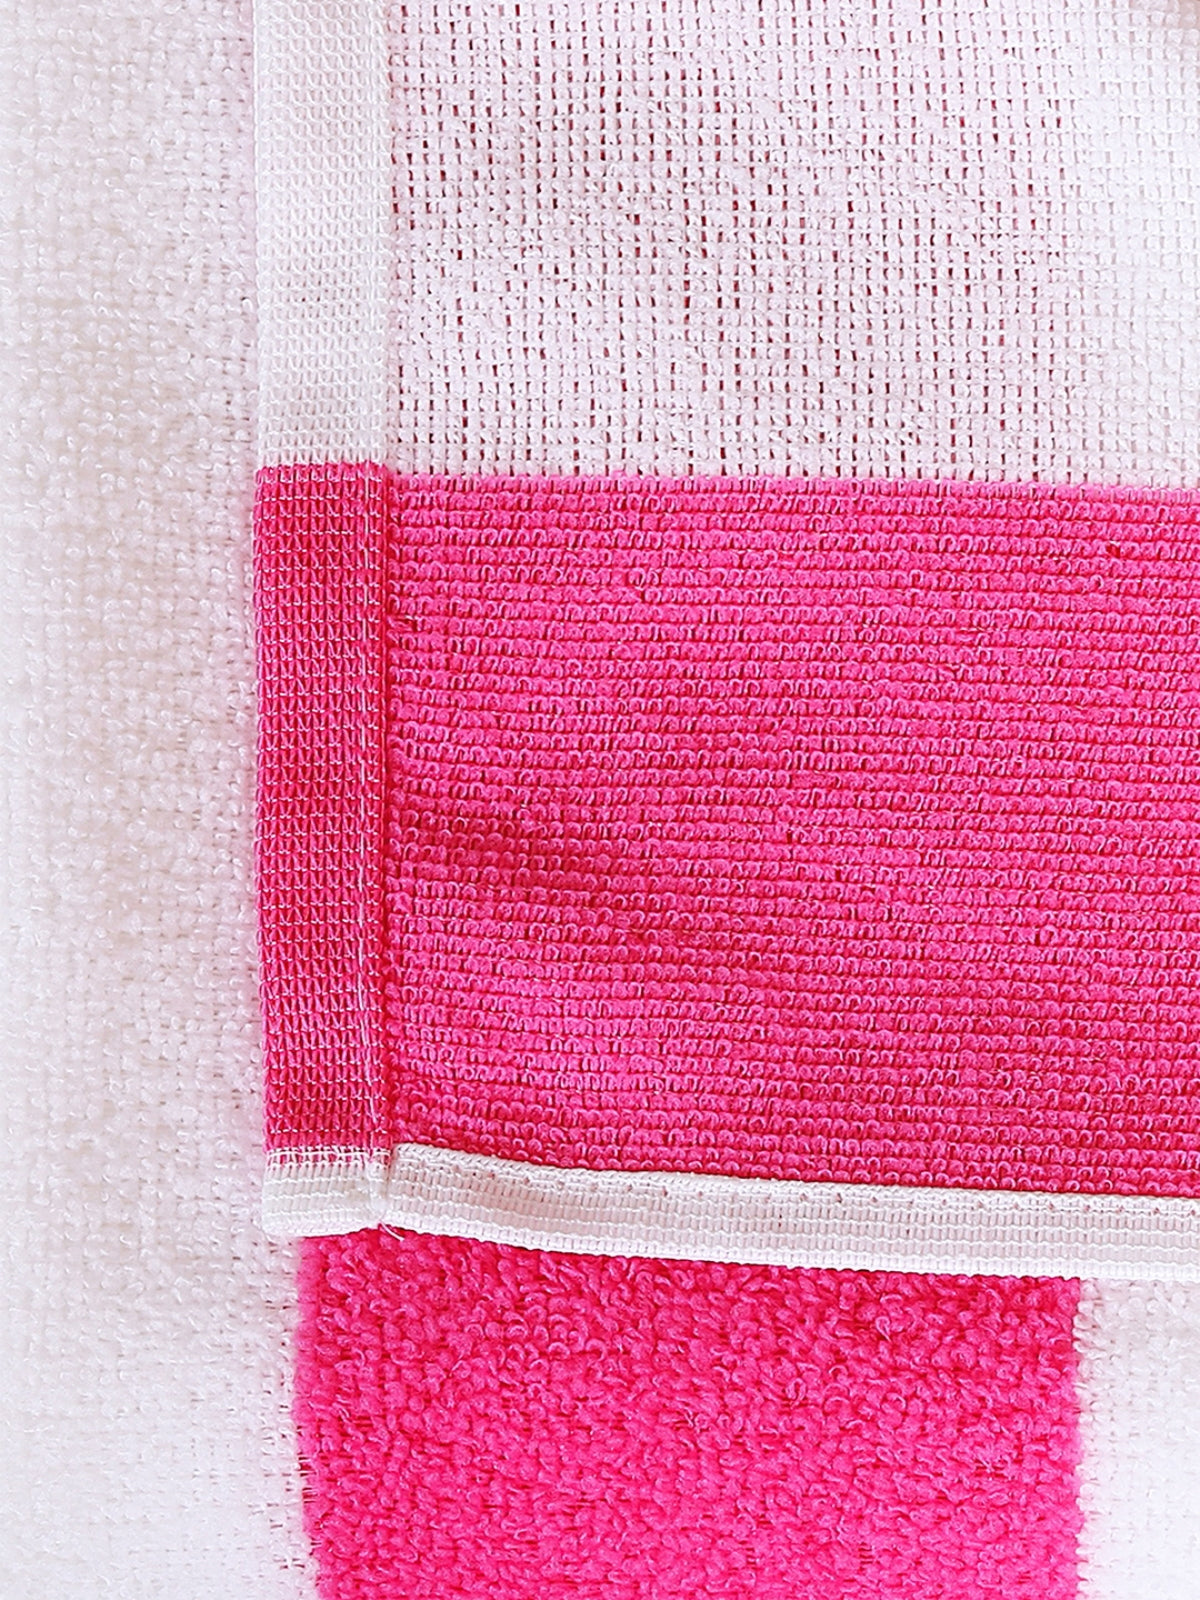 Set of 2 Pink & White Stripes Microfiber Towels